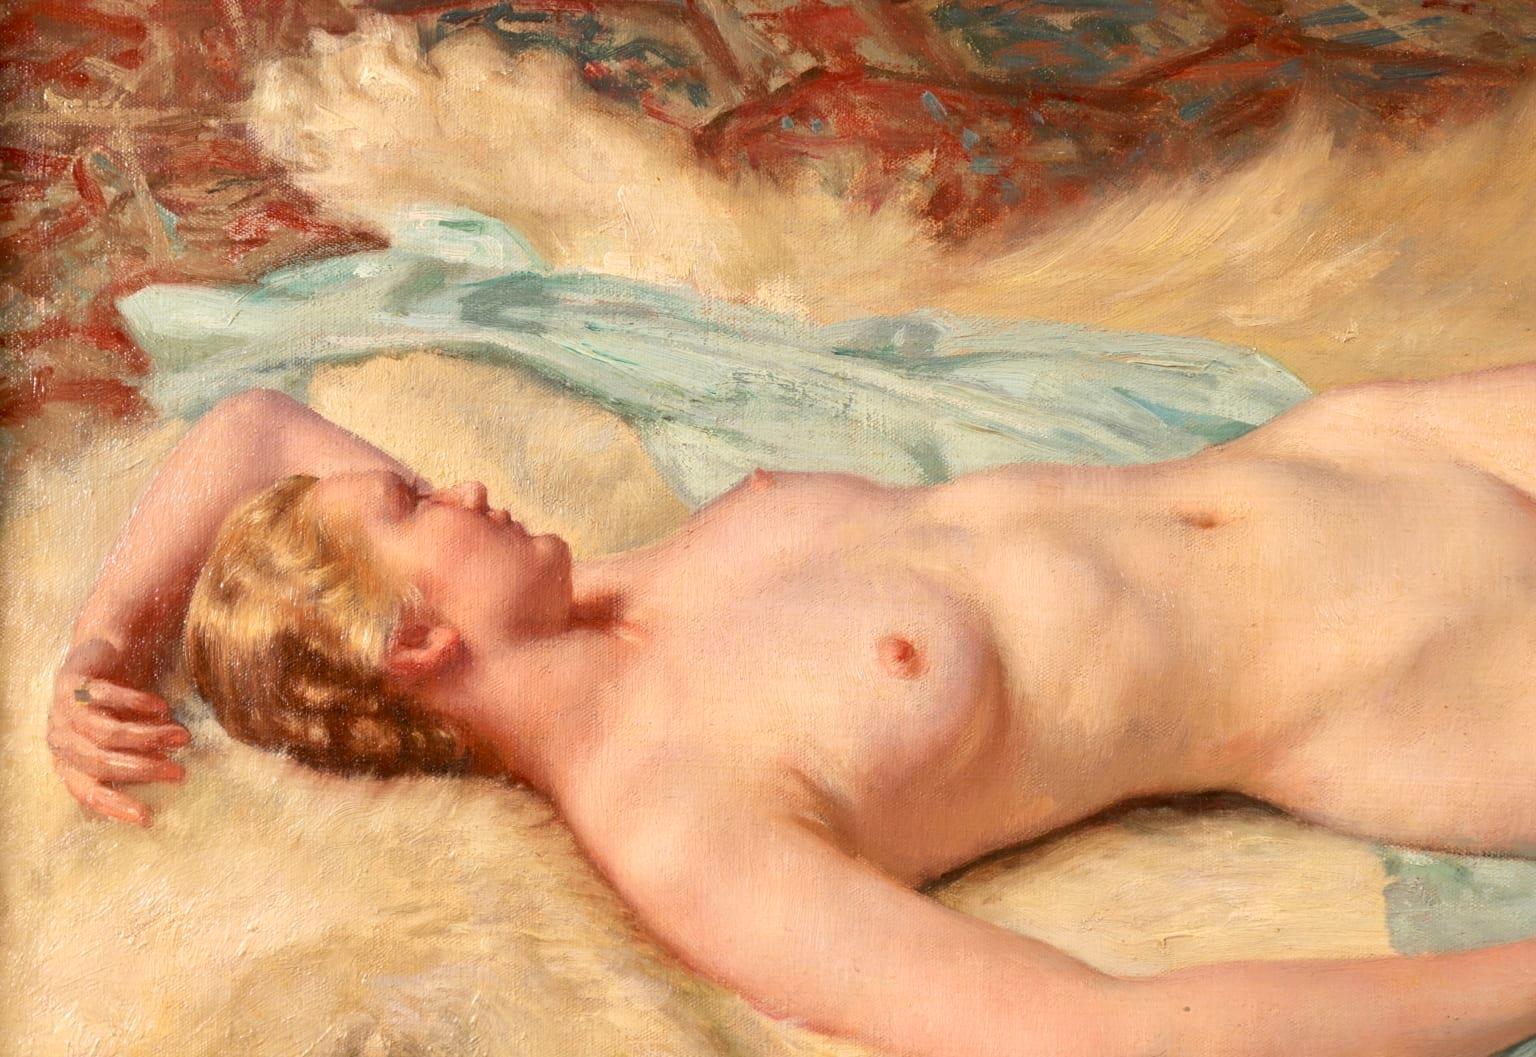 Nude Resting on Fur Rug - Impressionist Oil, Portrait of a Nude by Paul Sieffert 5